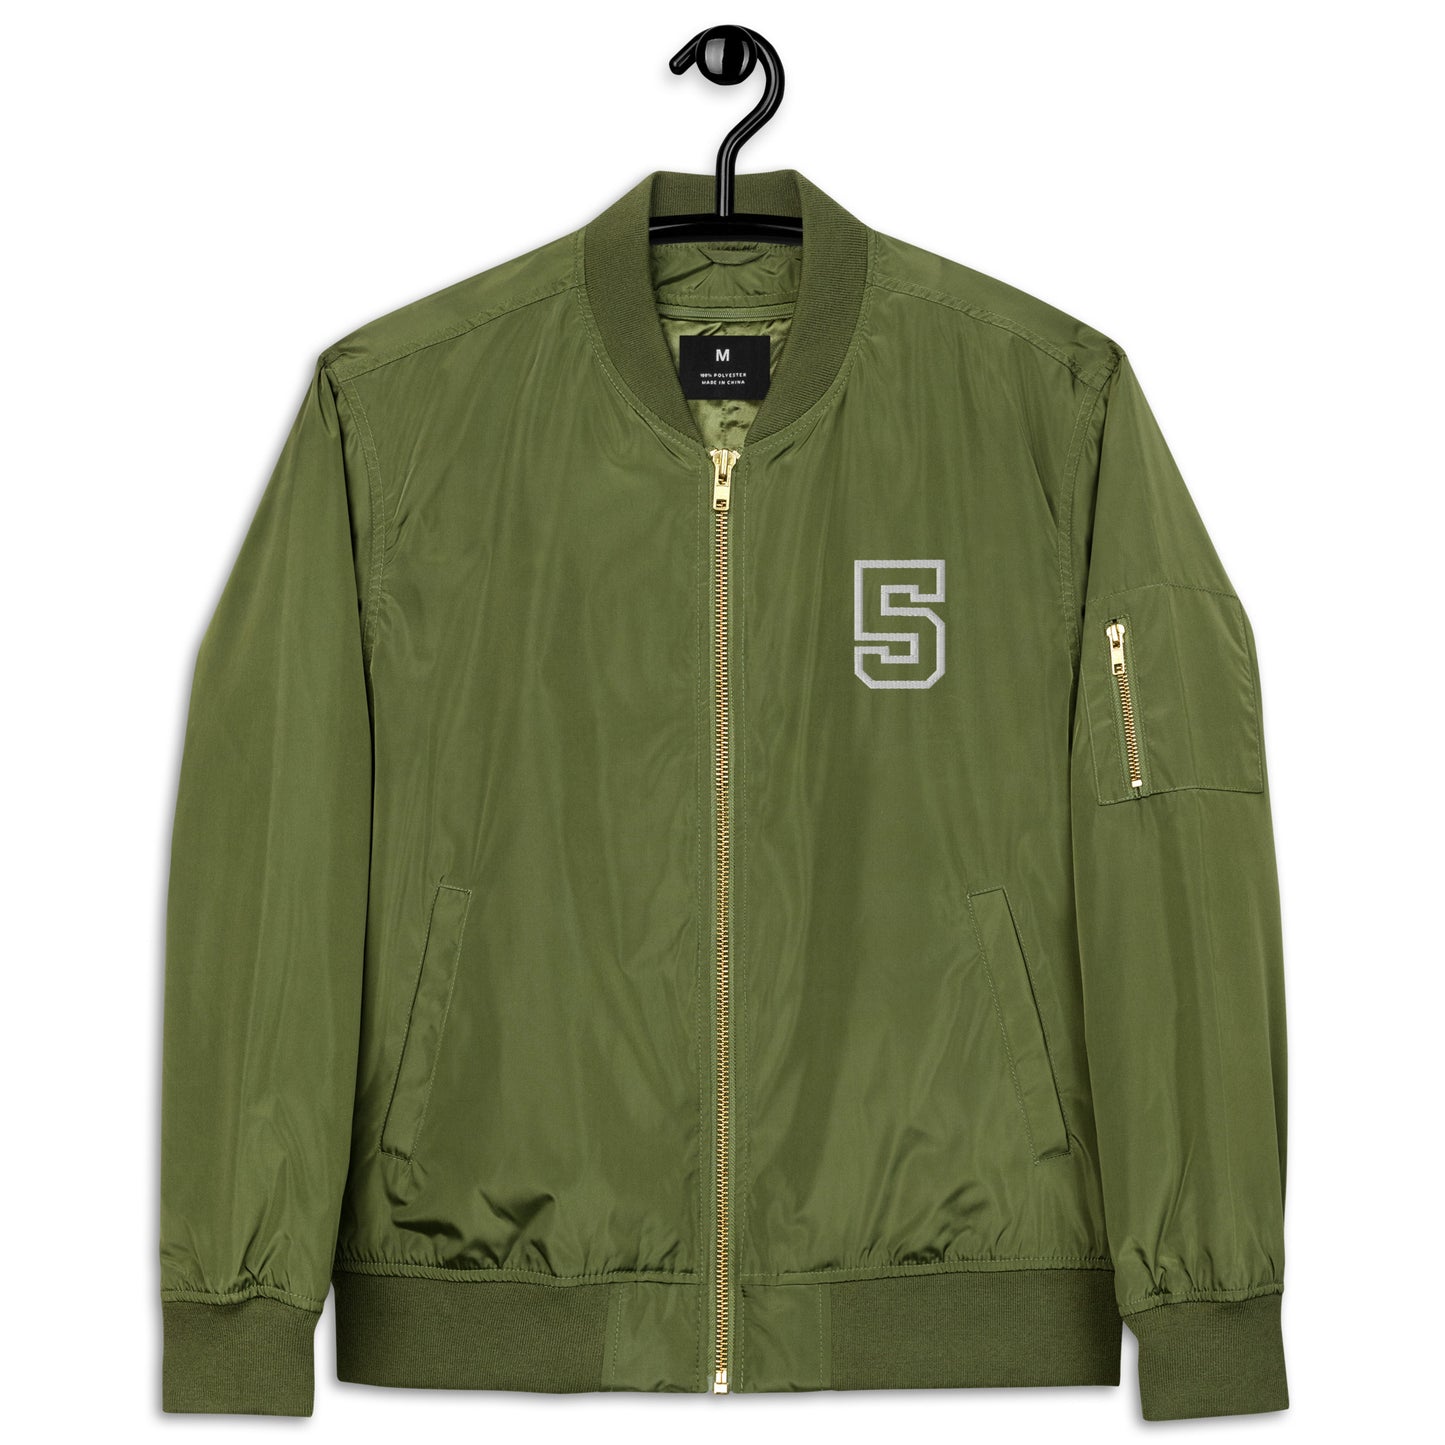 '5' Premium recycled bomber jacket